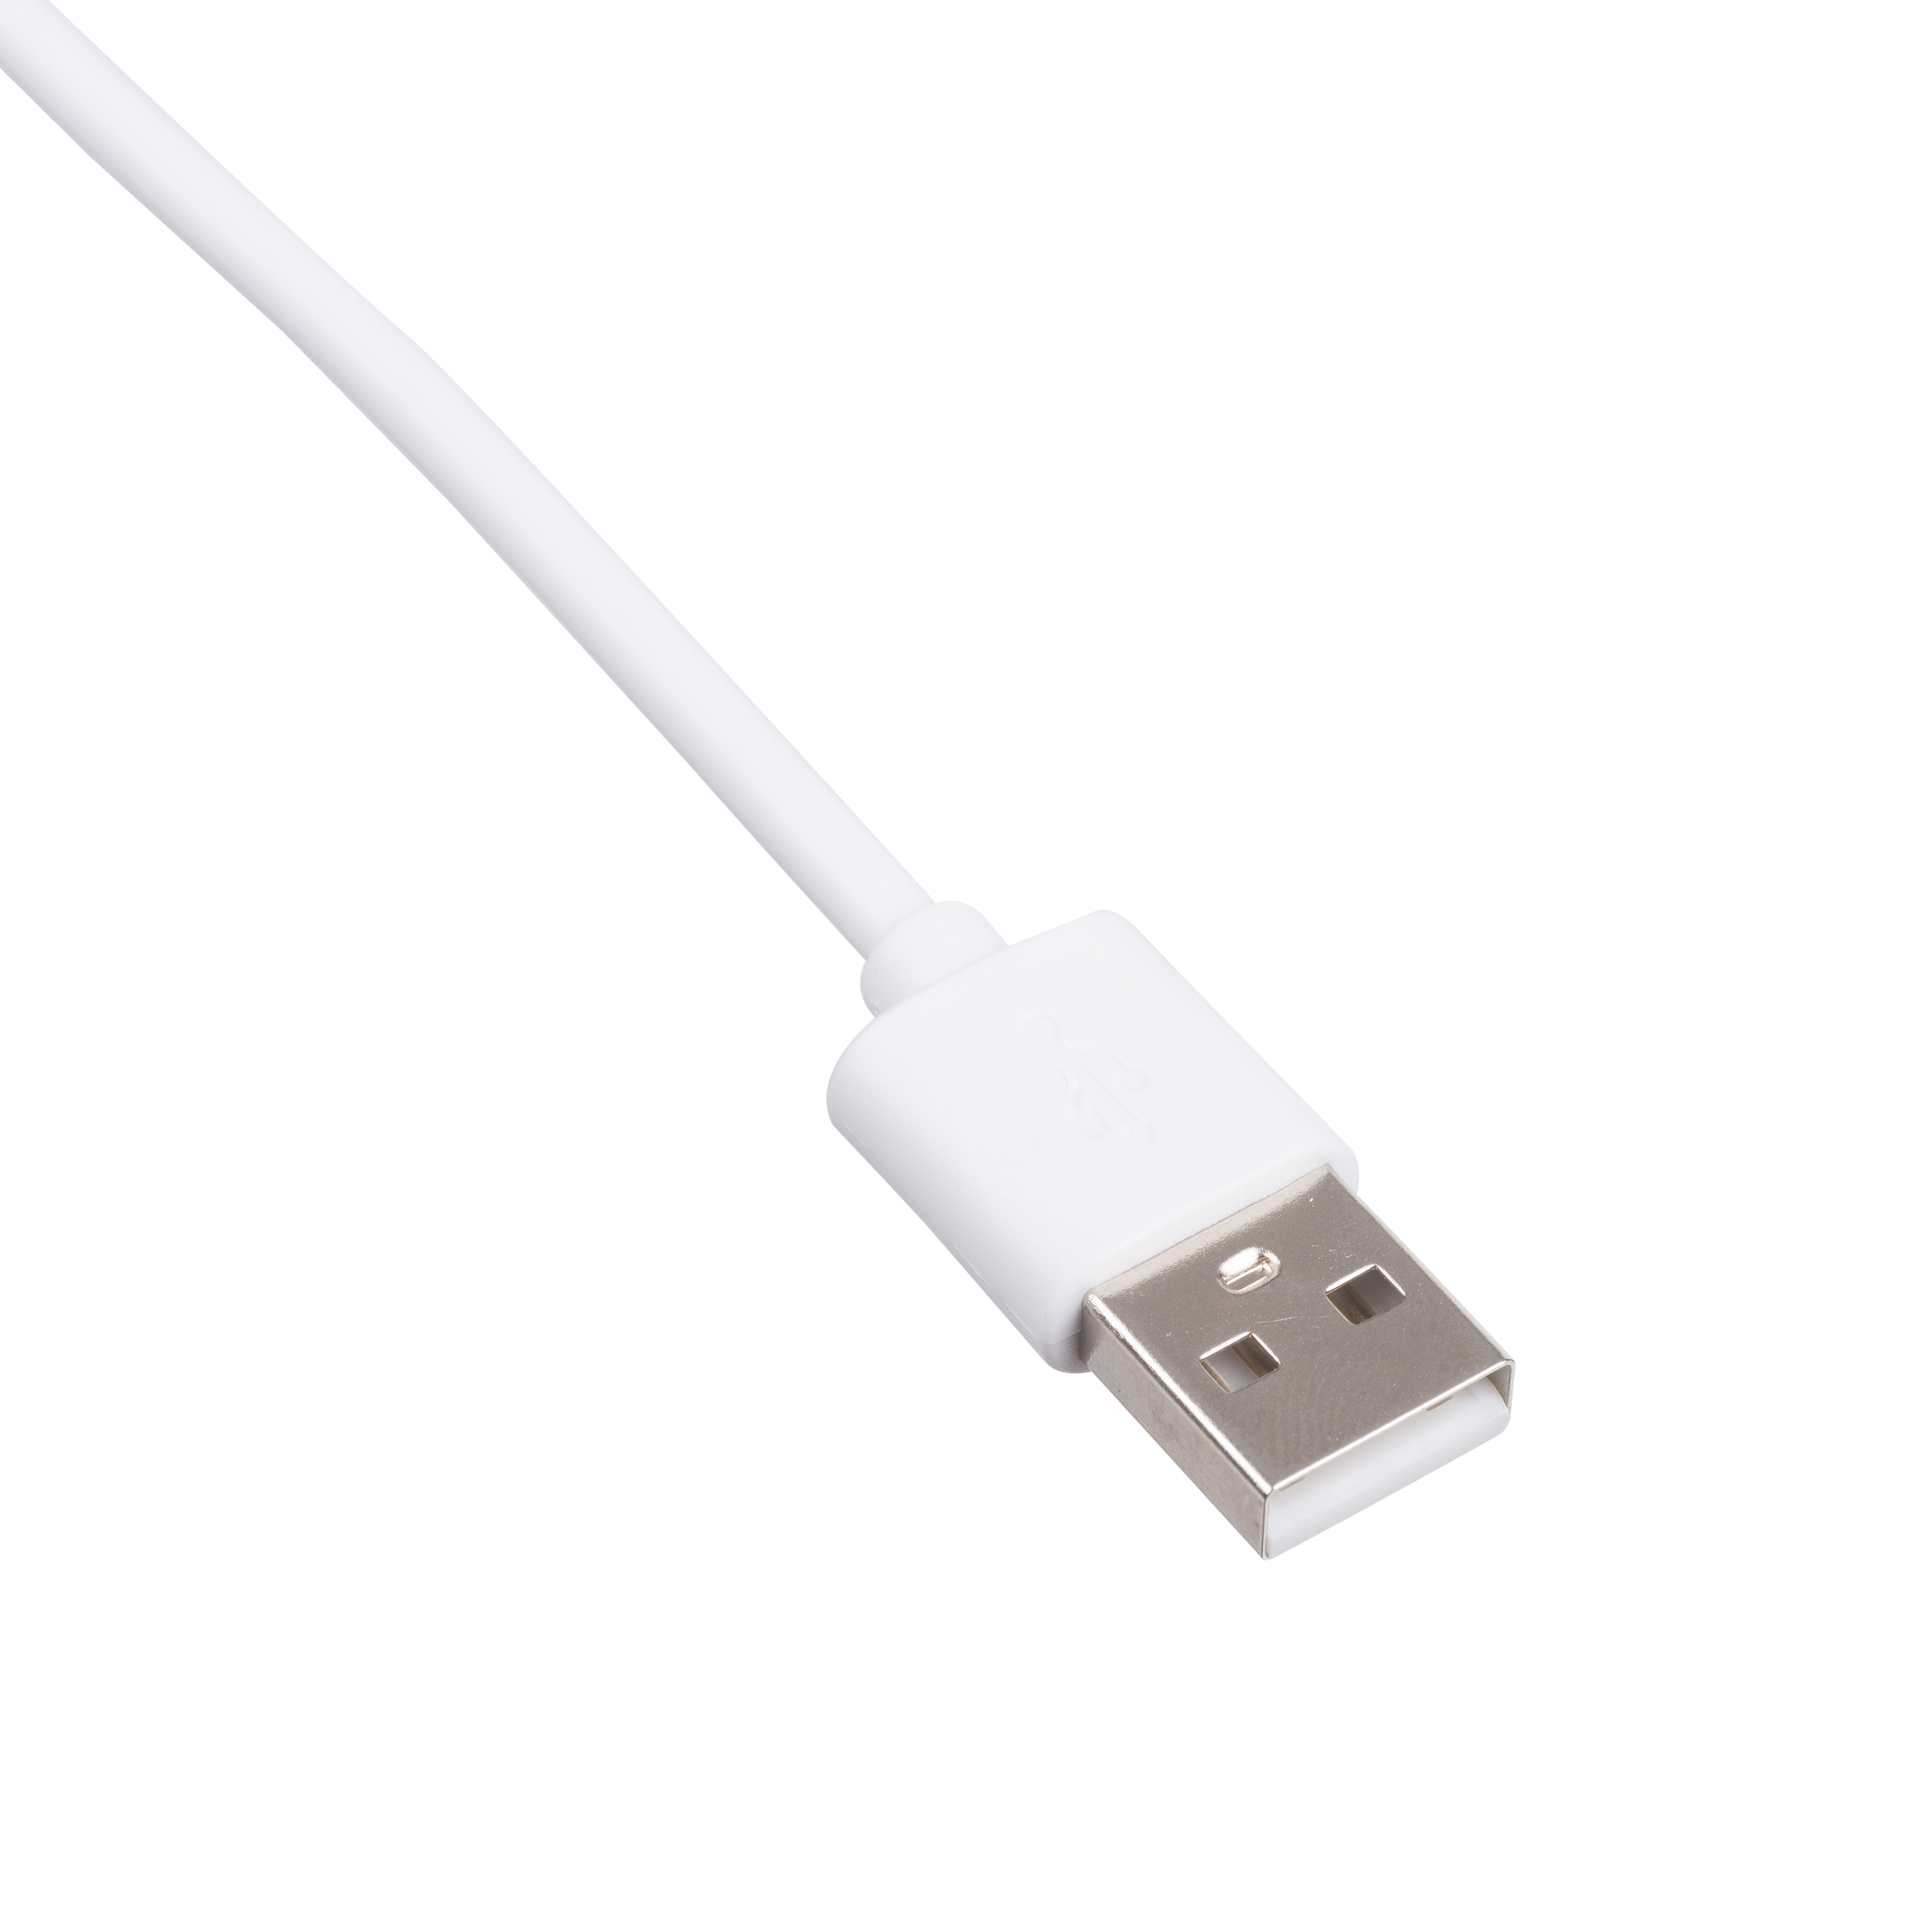 Cable USB C A lightning SIN LOGO